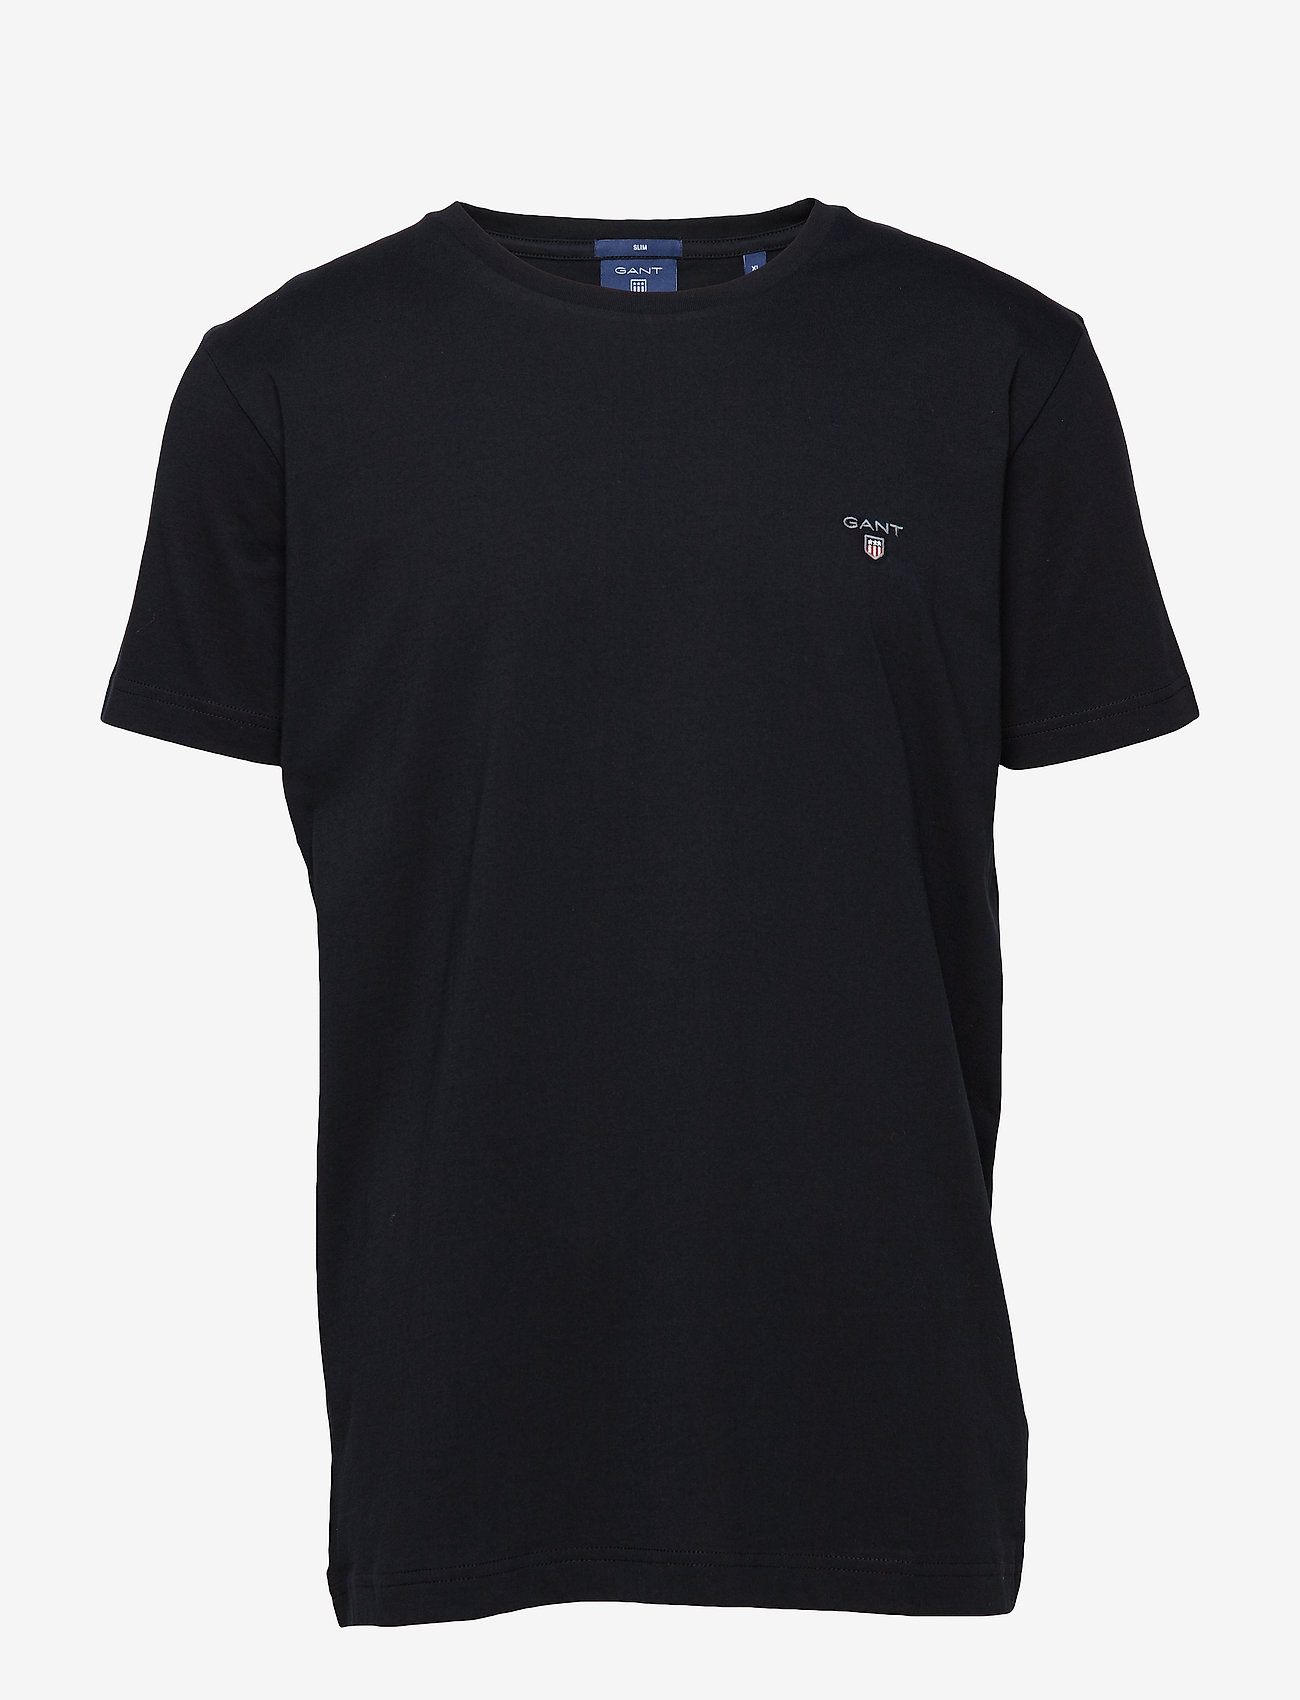 Original Slim T-shirt (Black) (39 